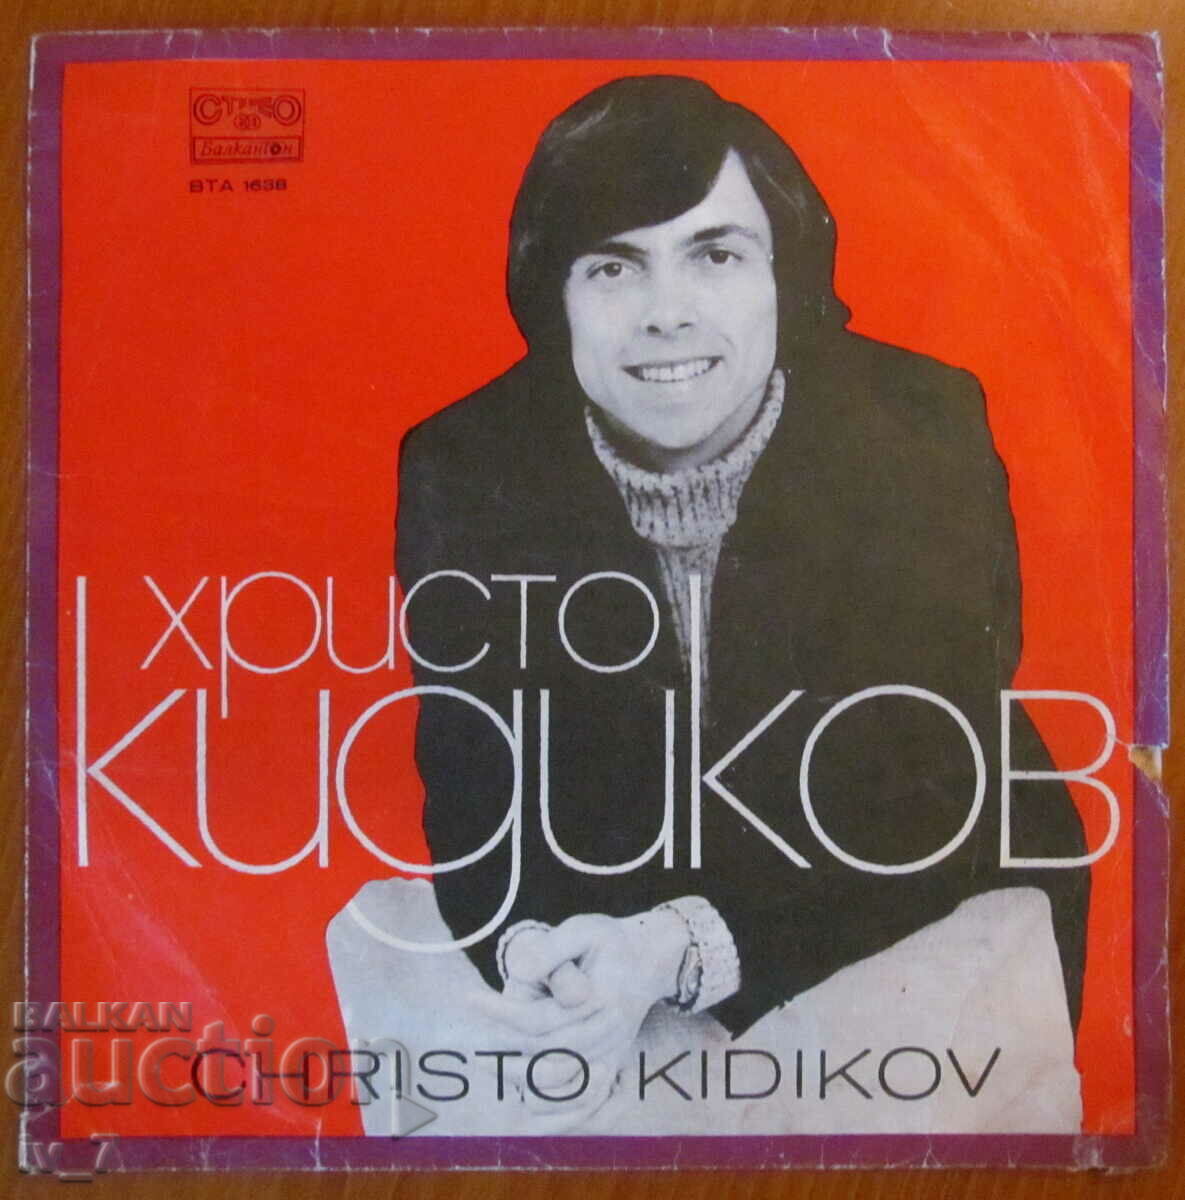 RECORD - HRISTO KIDIKOV, large format